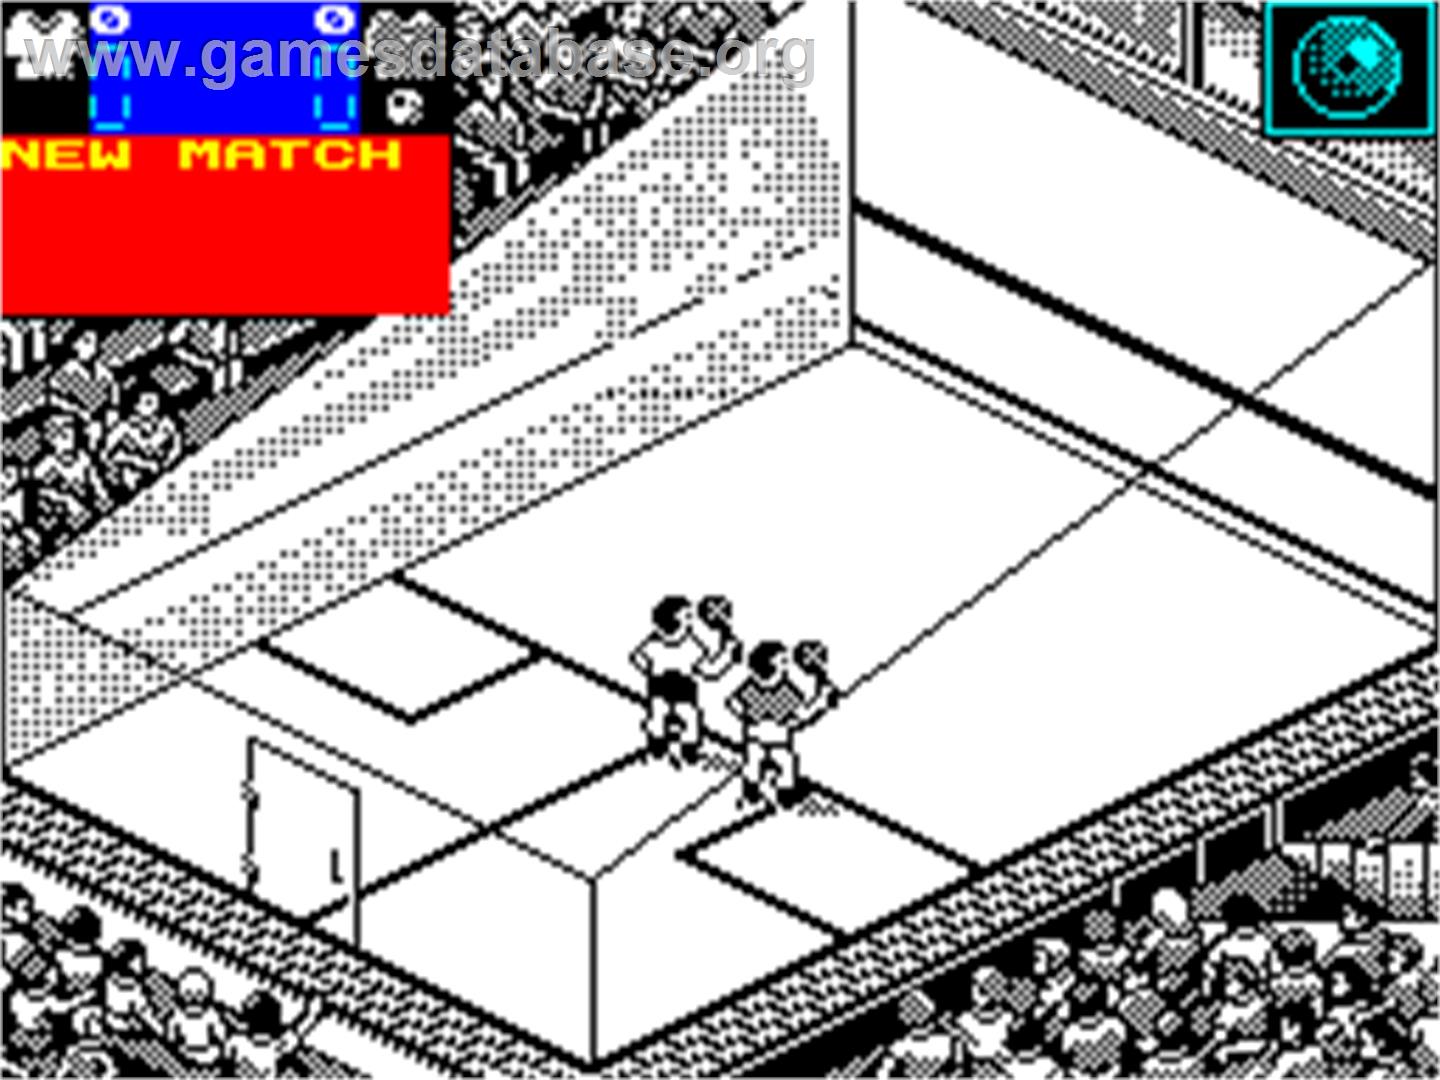 Jahangir Khan's World Championship Squash - Sinclair ZX Spectrum - Artwork - In Game